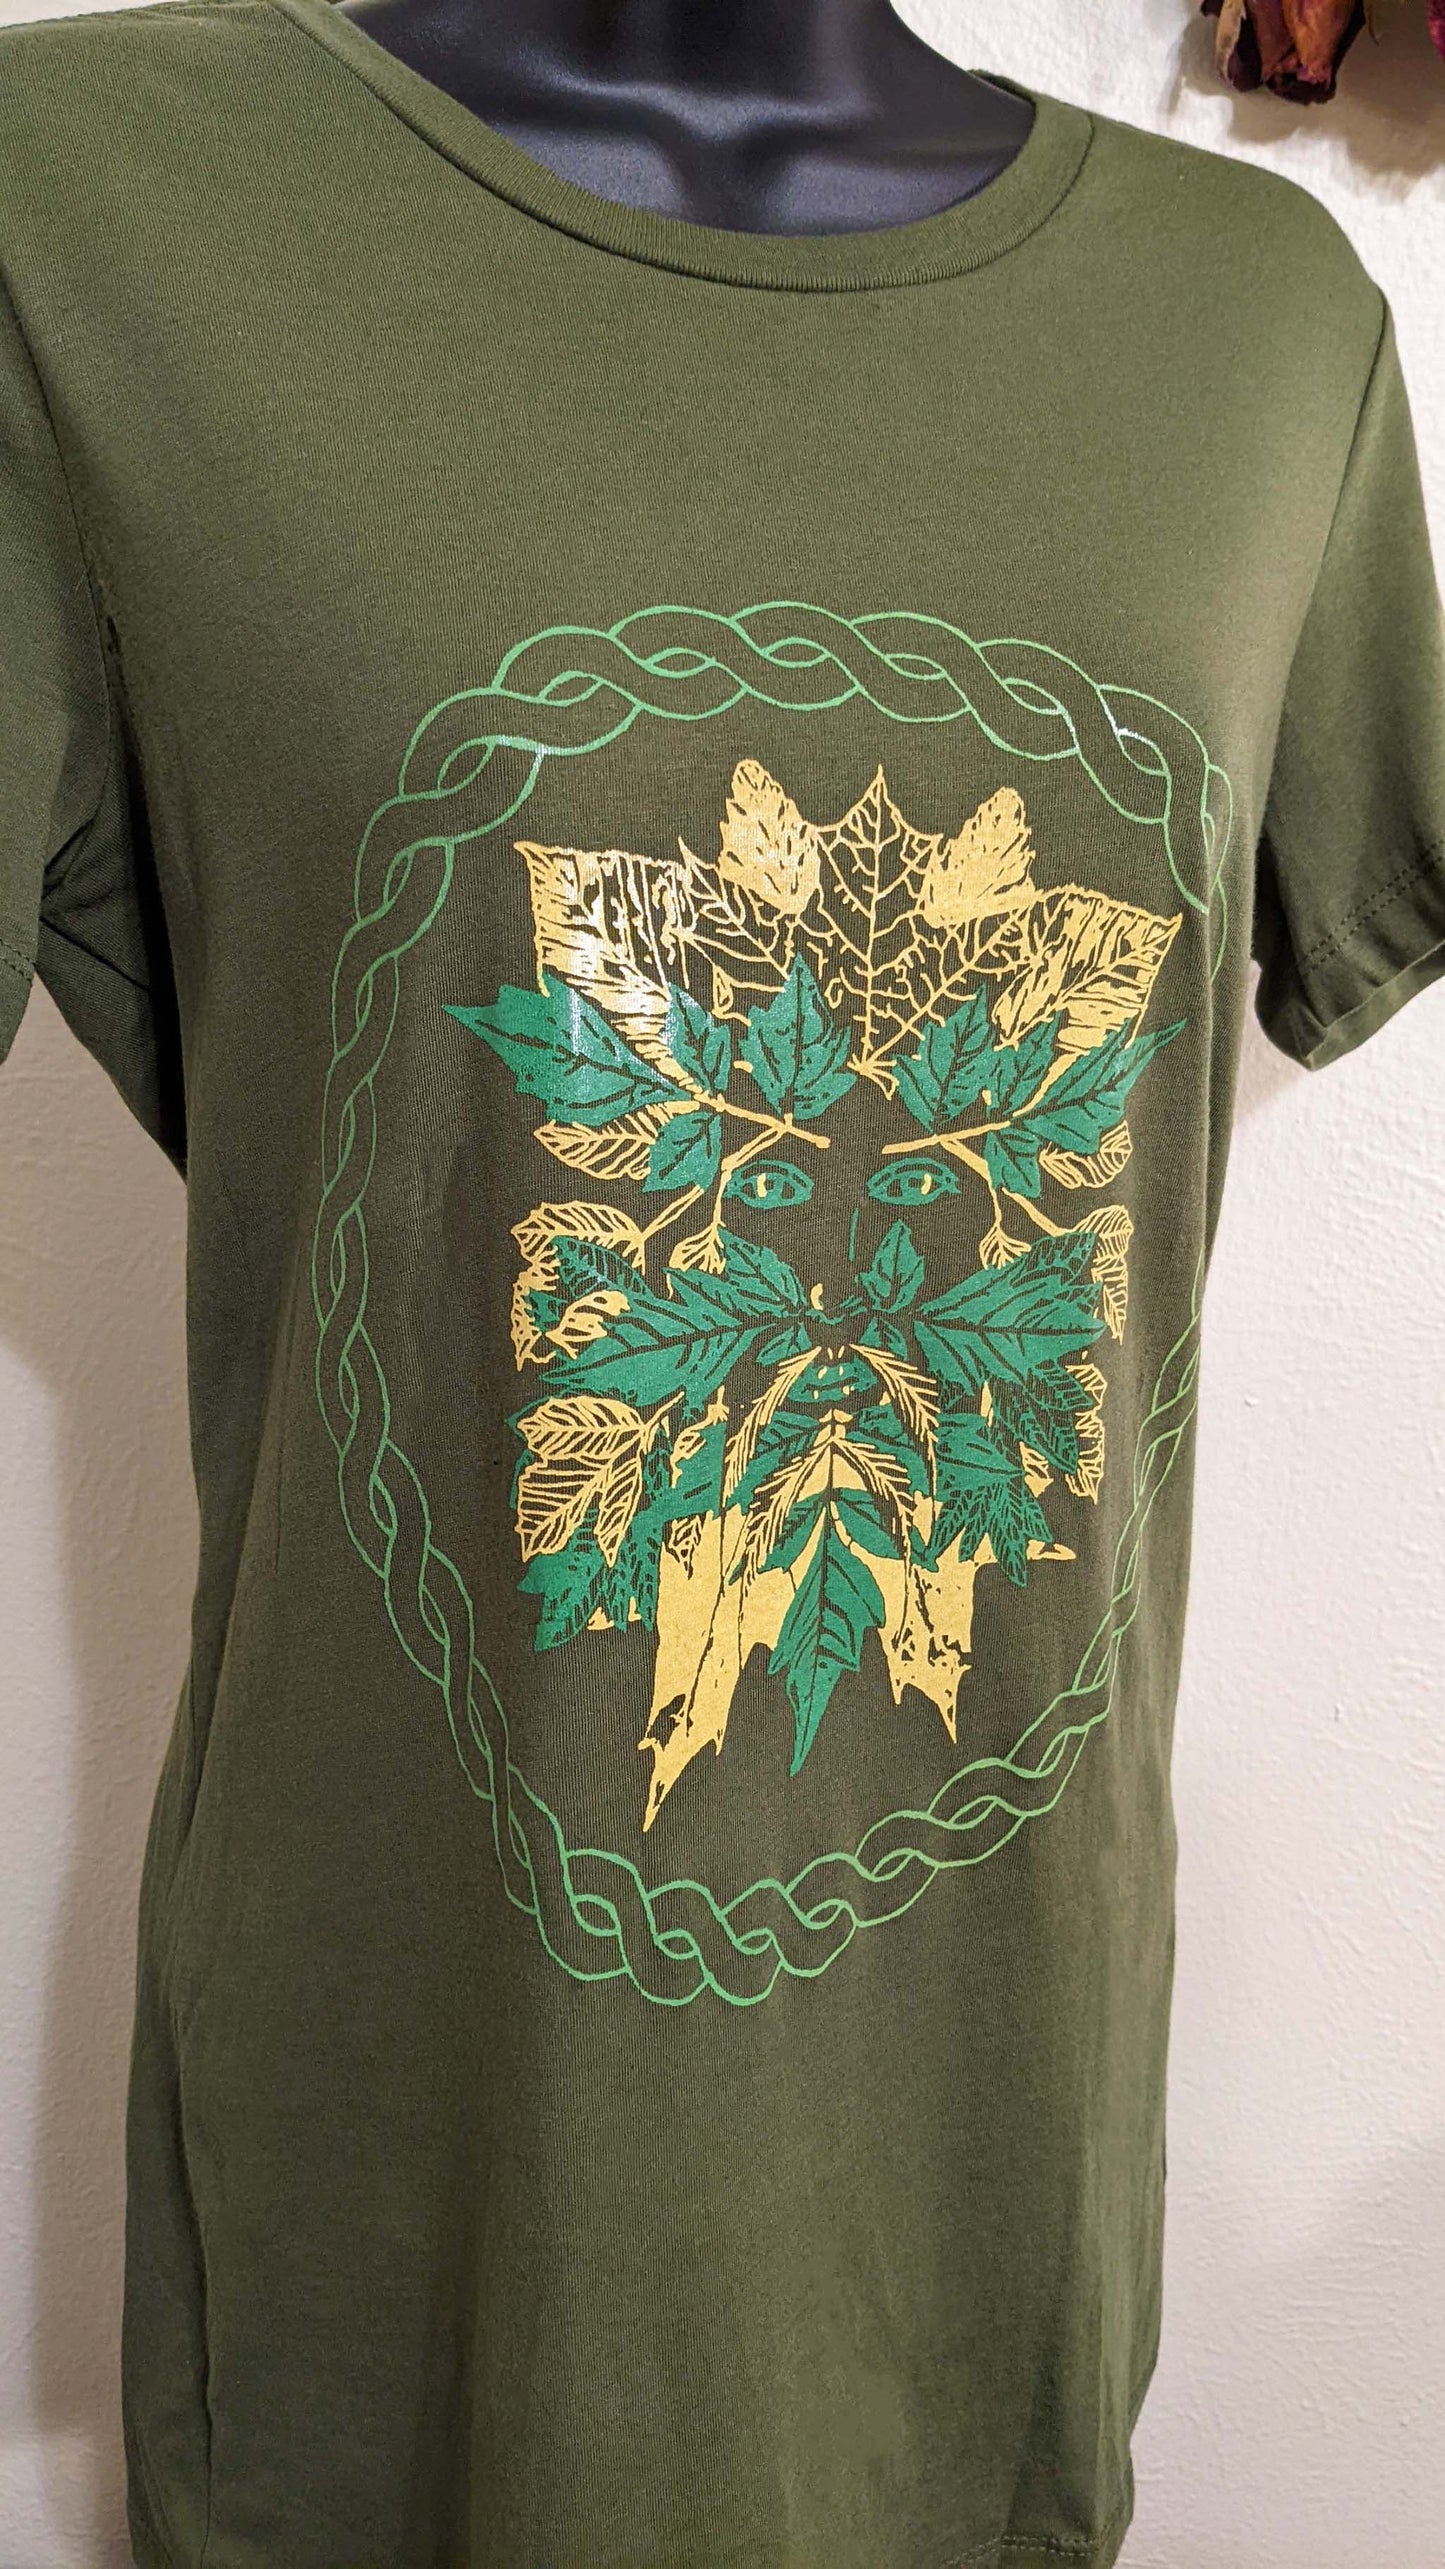 Green Man - Unisex Cut Olive T-shirt